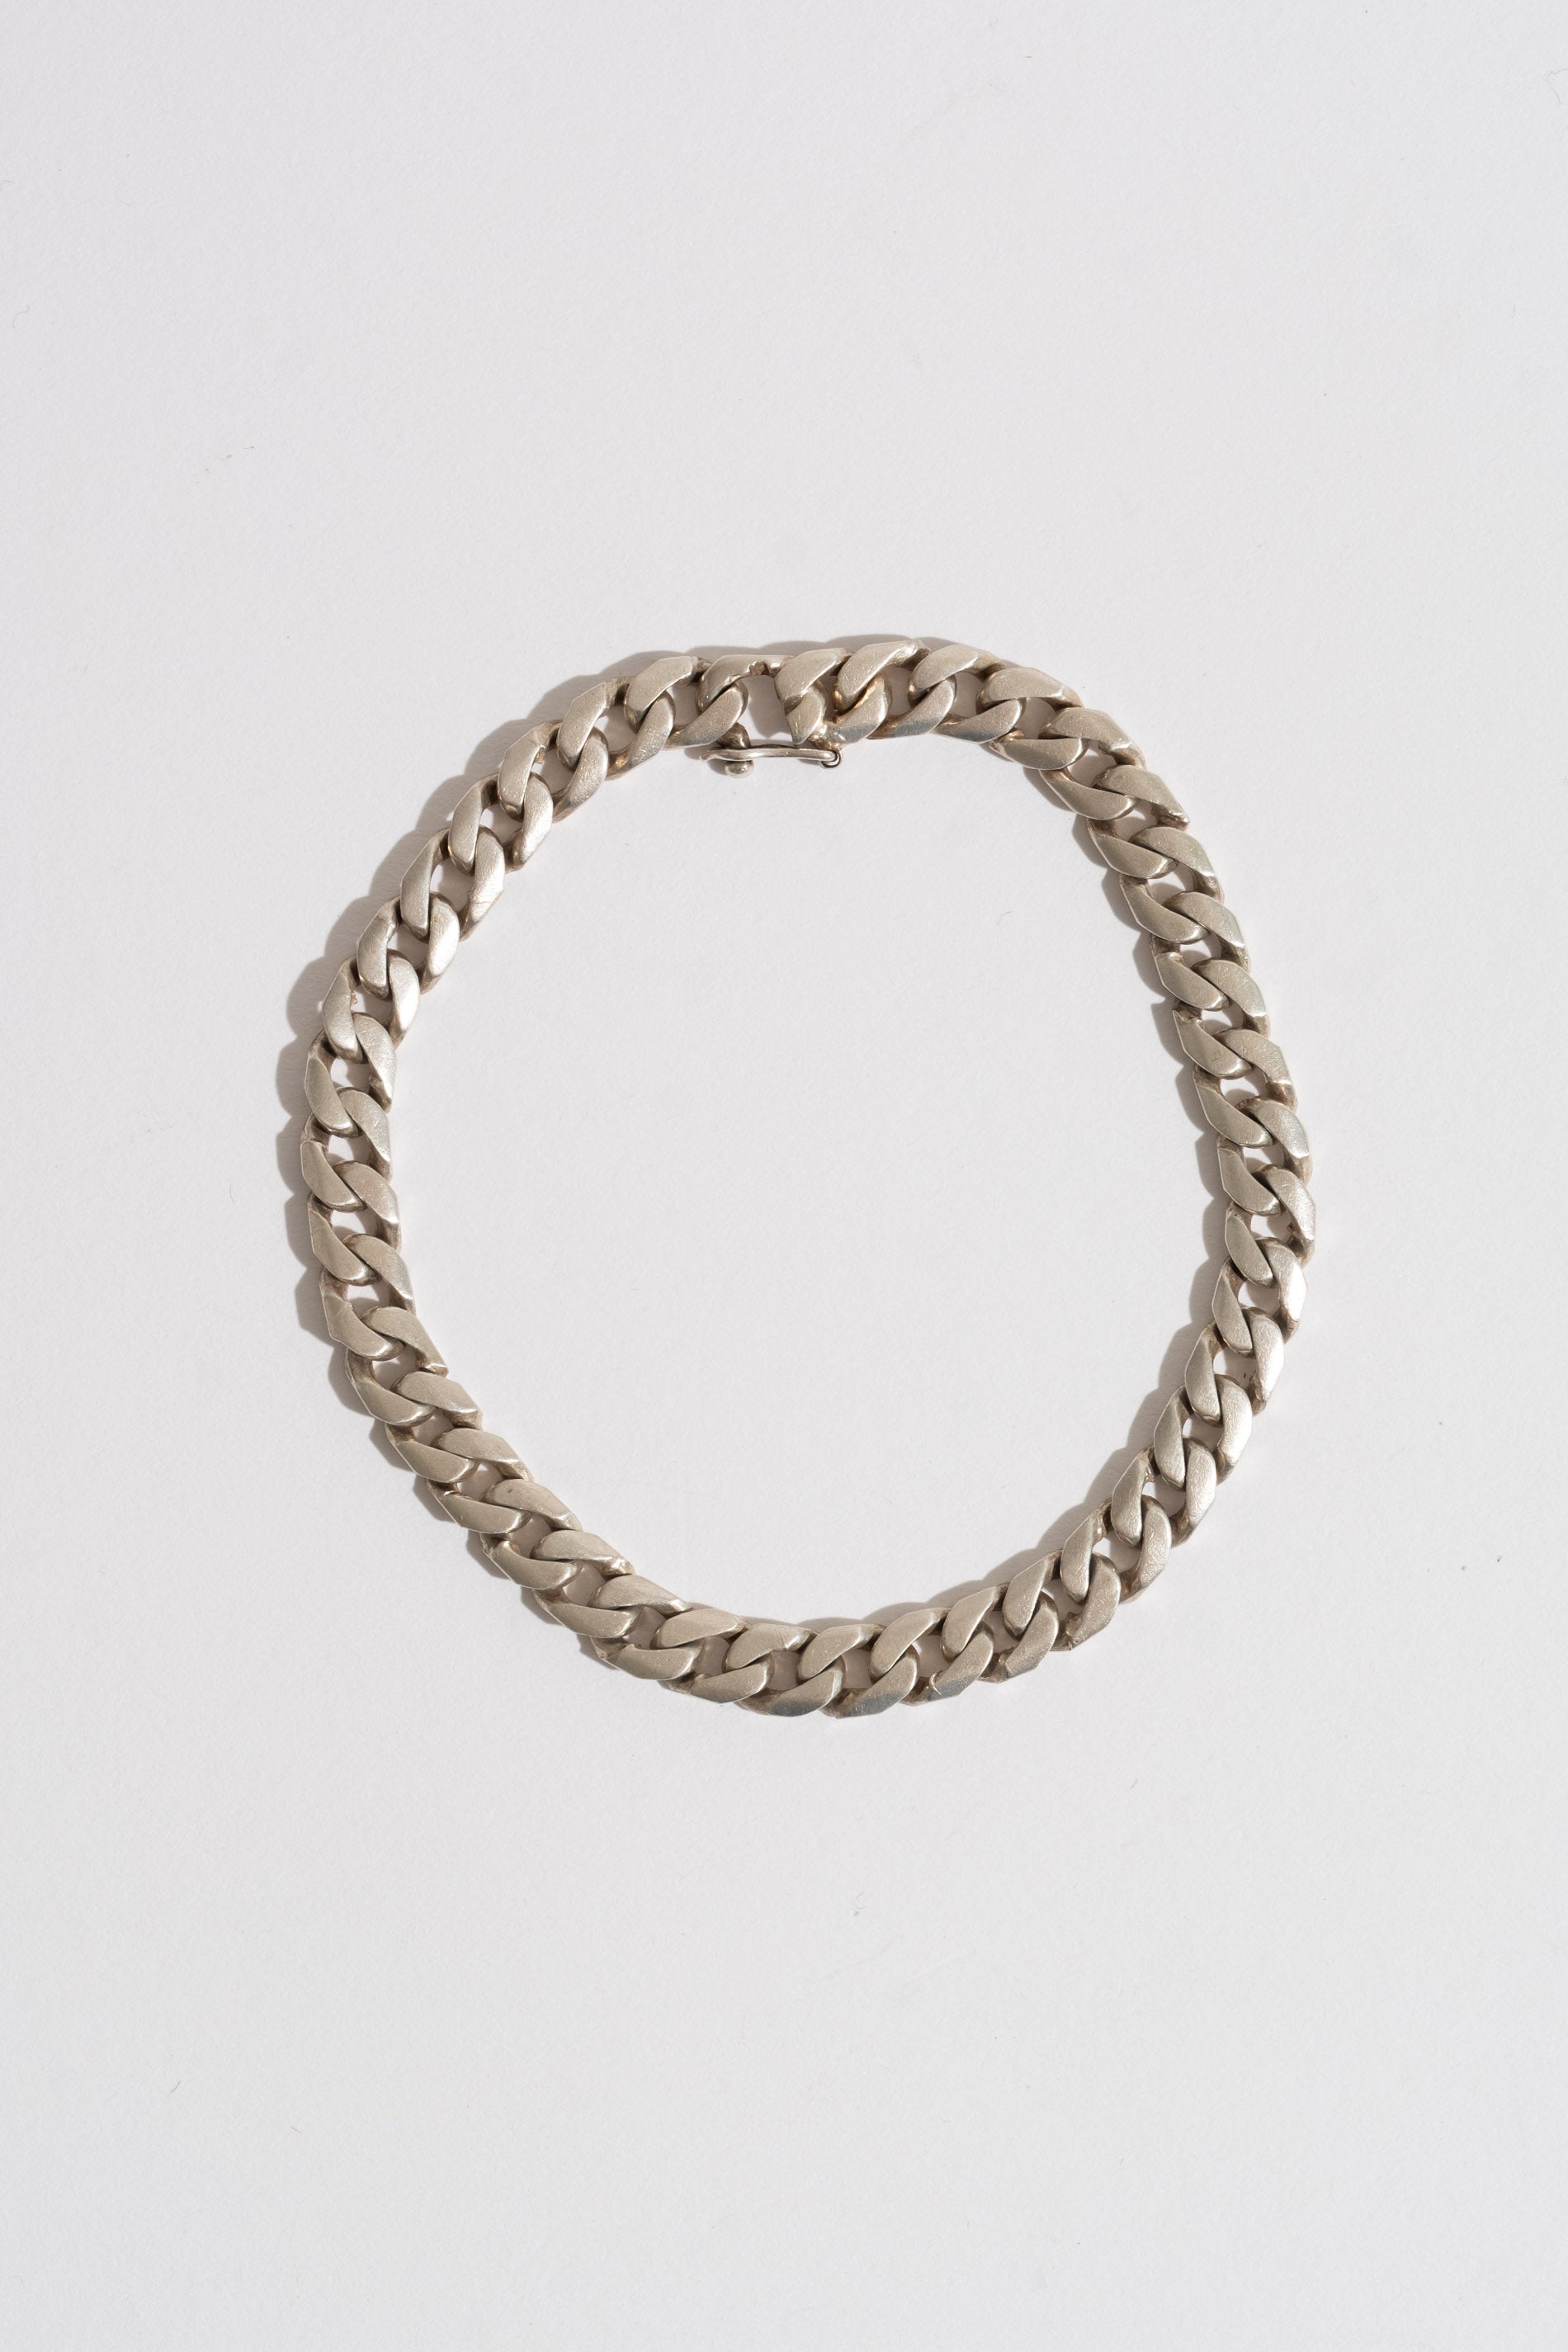 RELIQUARY VINTAGE Slim Sterling Silver Hidden Clasp Curb Chain Bracelet 02